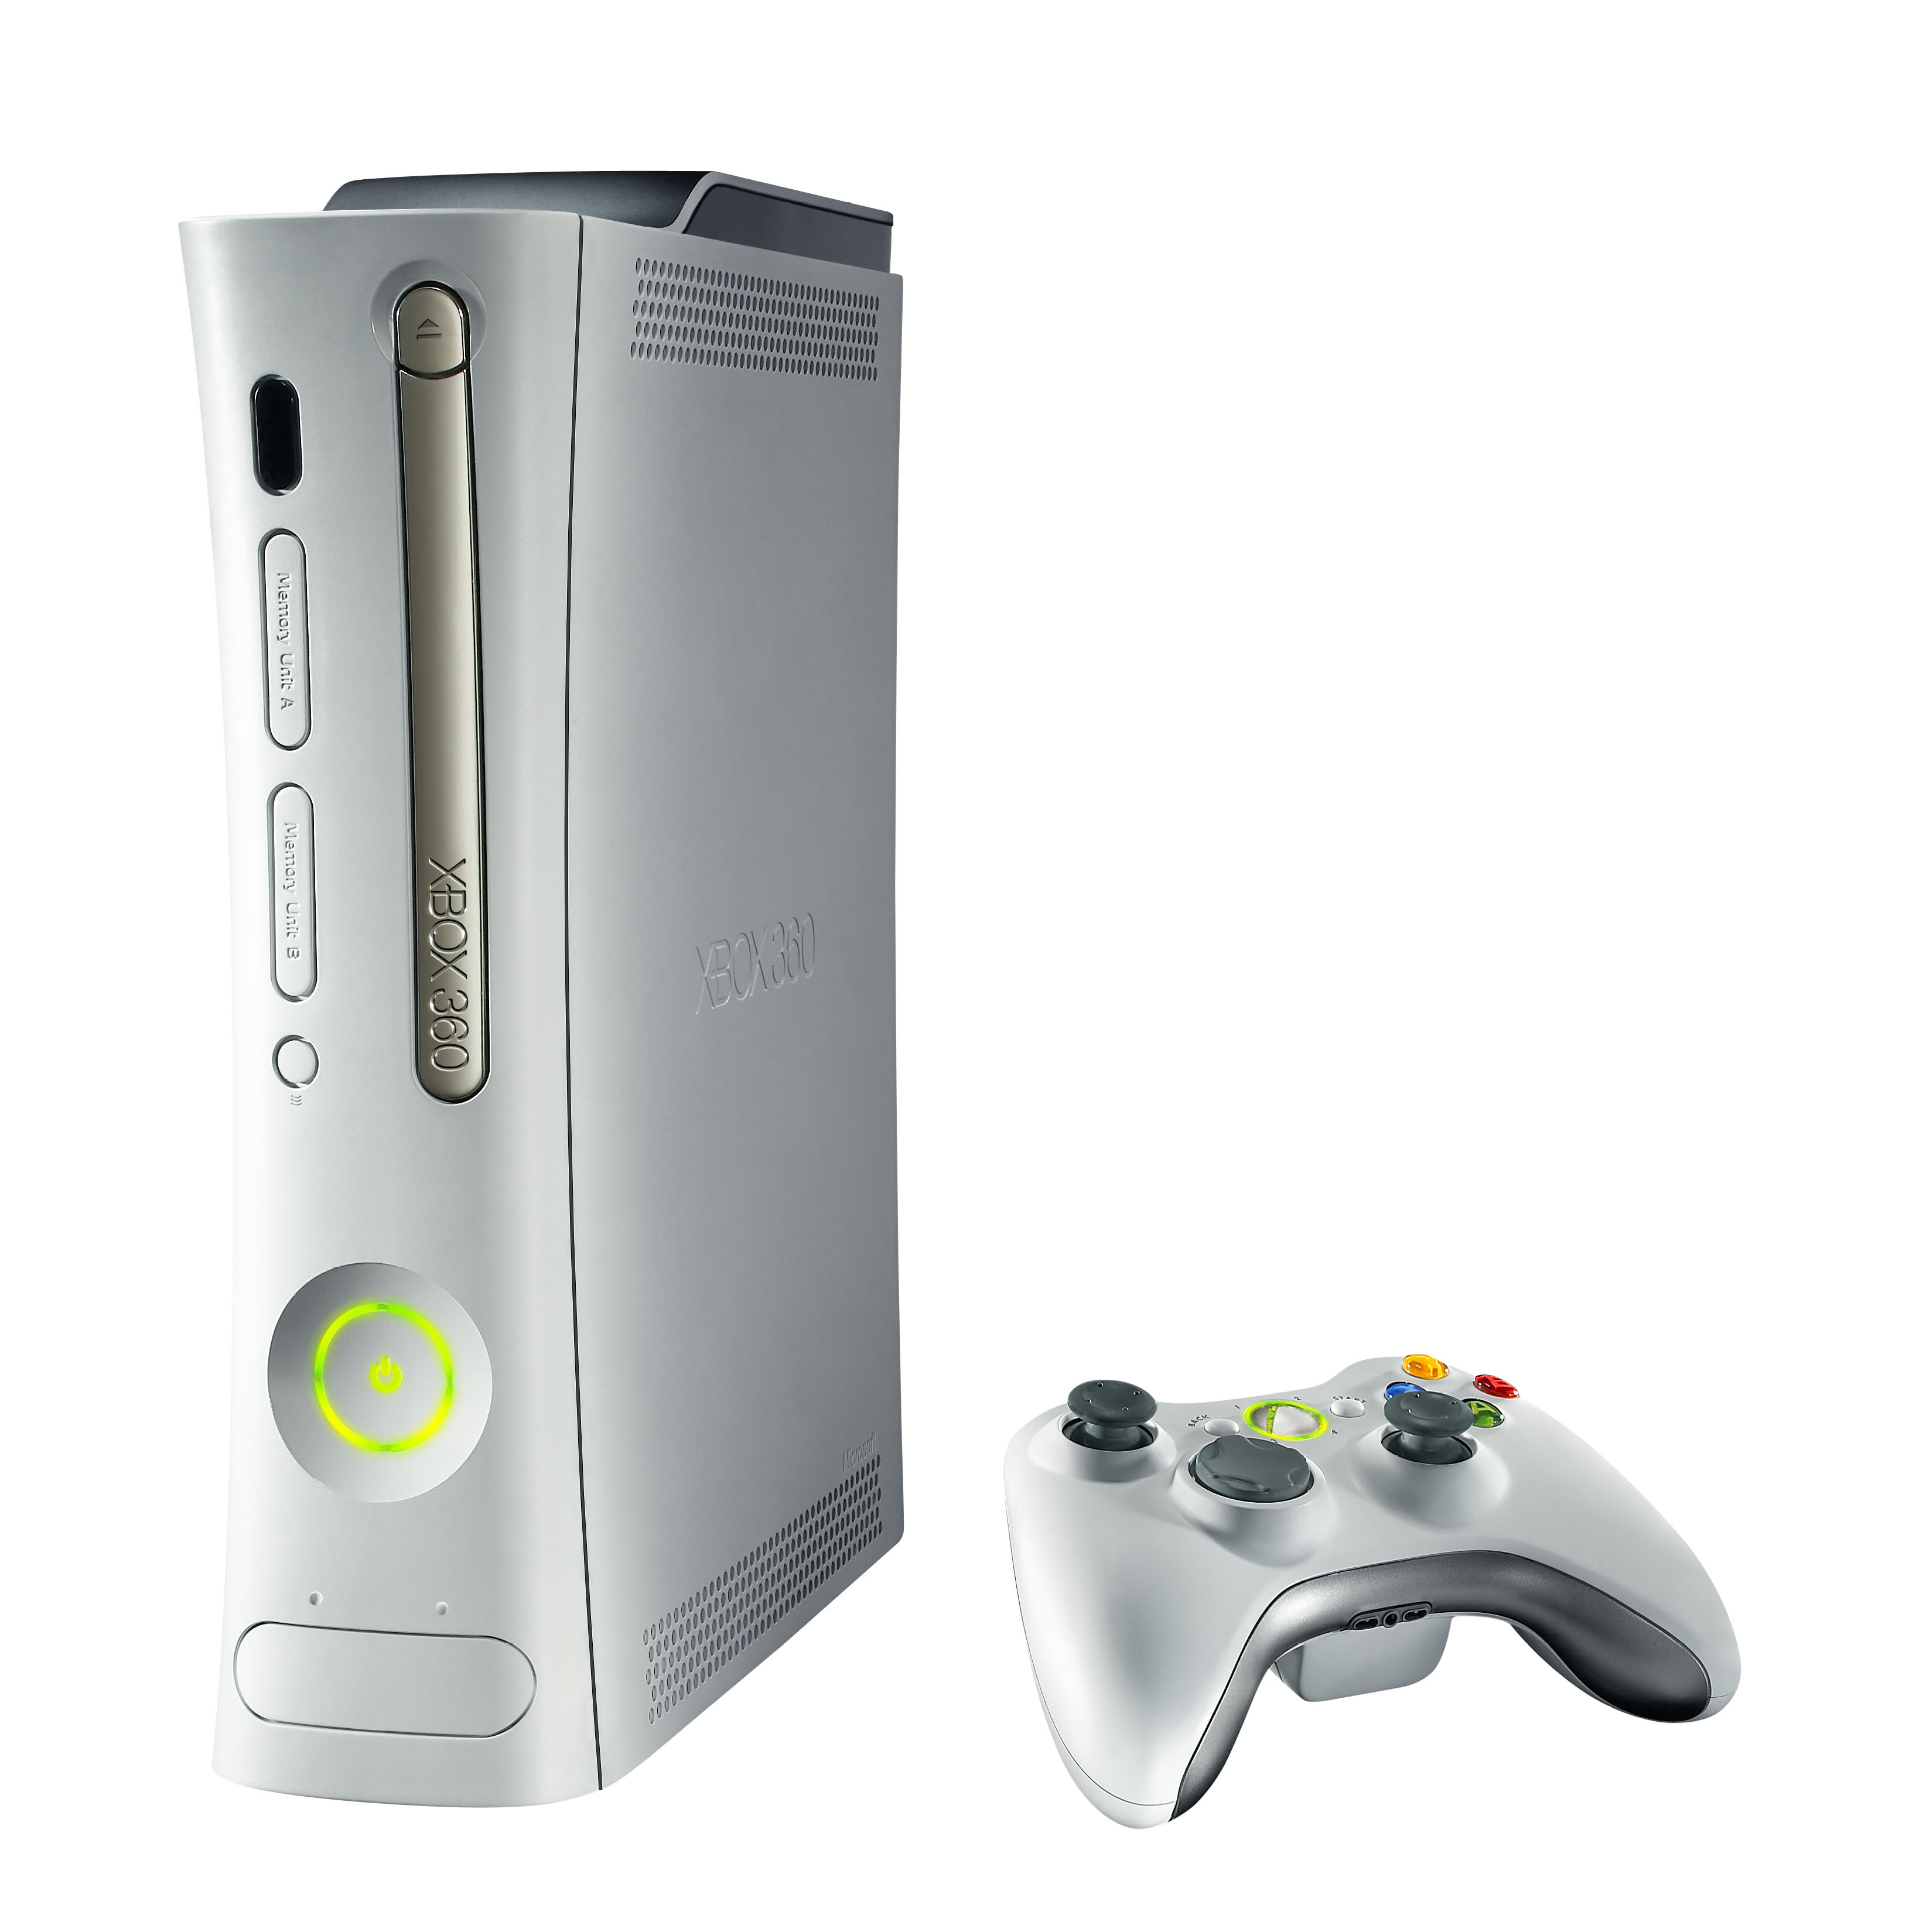 Xbox 360 emulator mac with xbox live